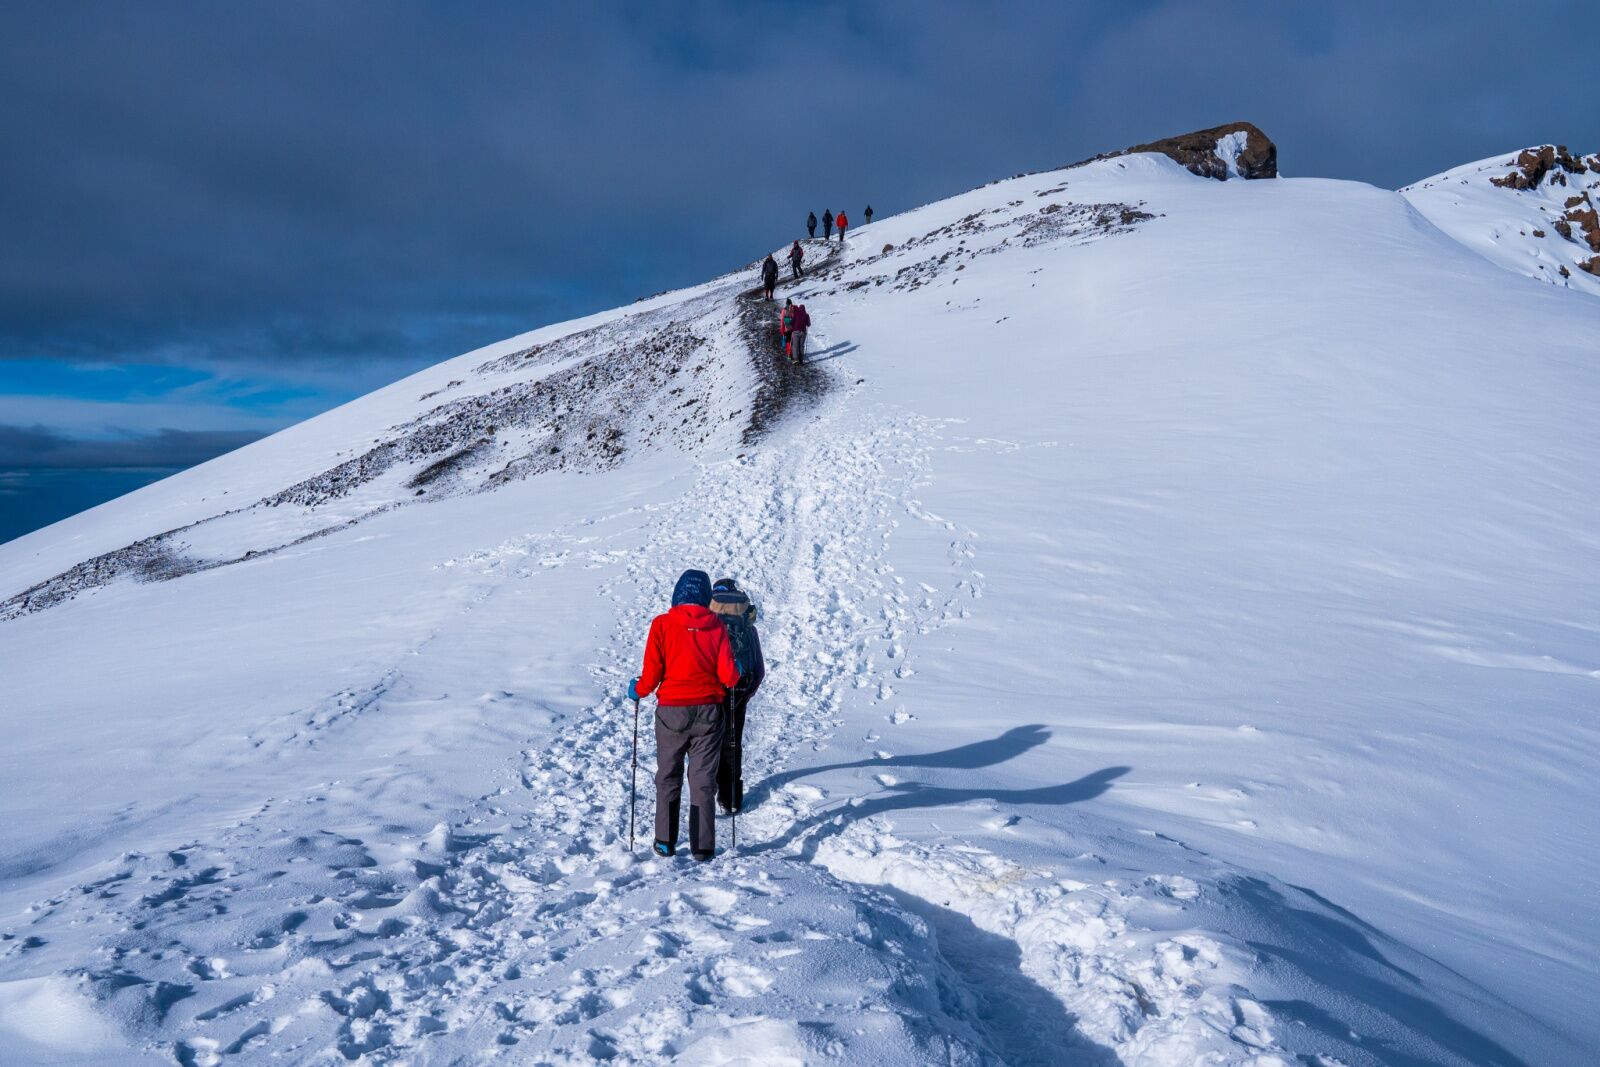 Mount kilimanjaro wifi hikers in snow